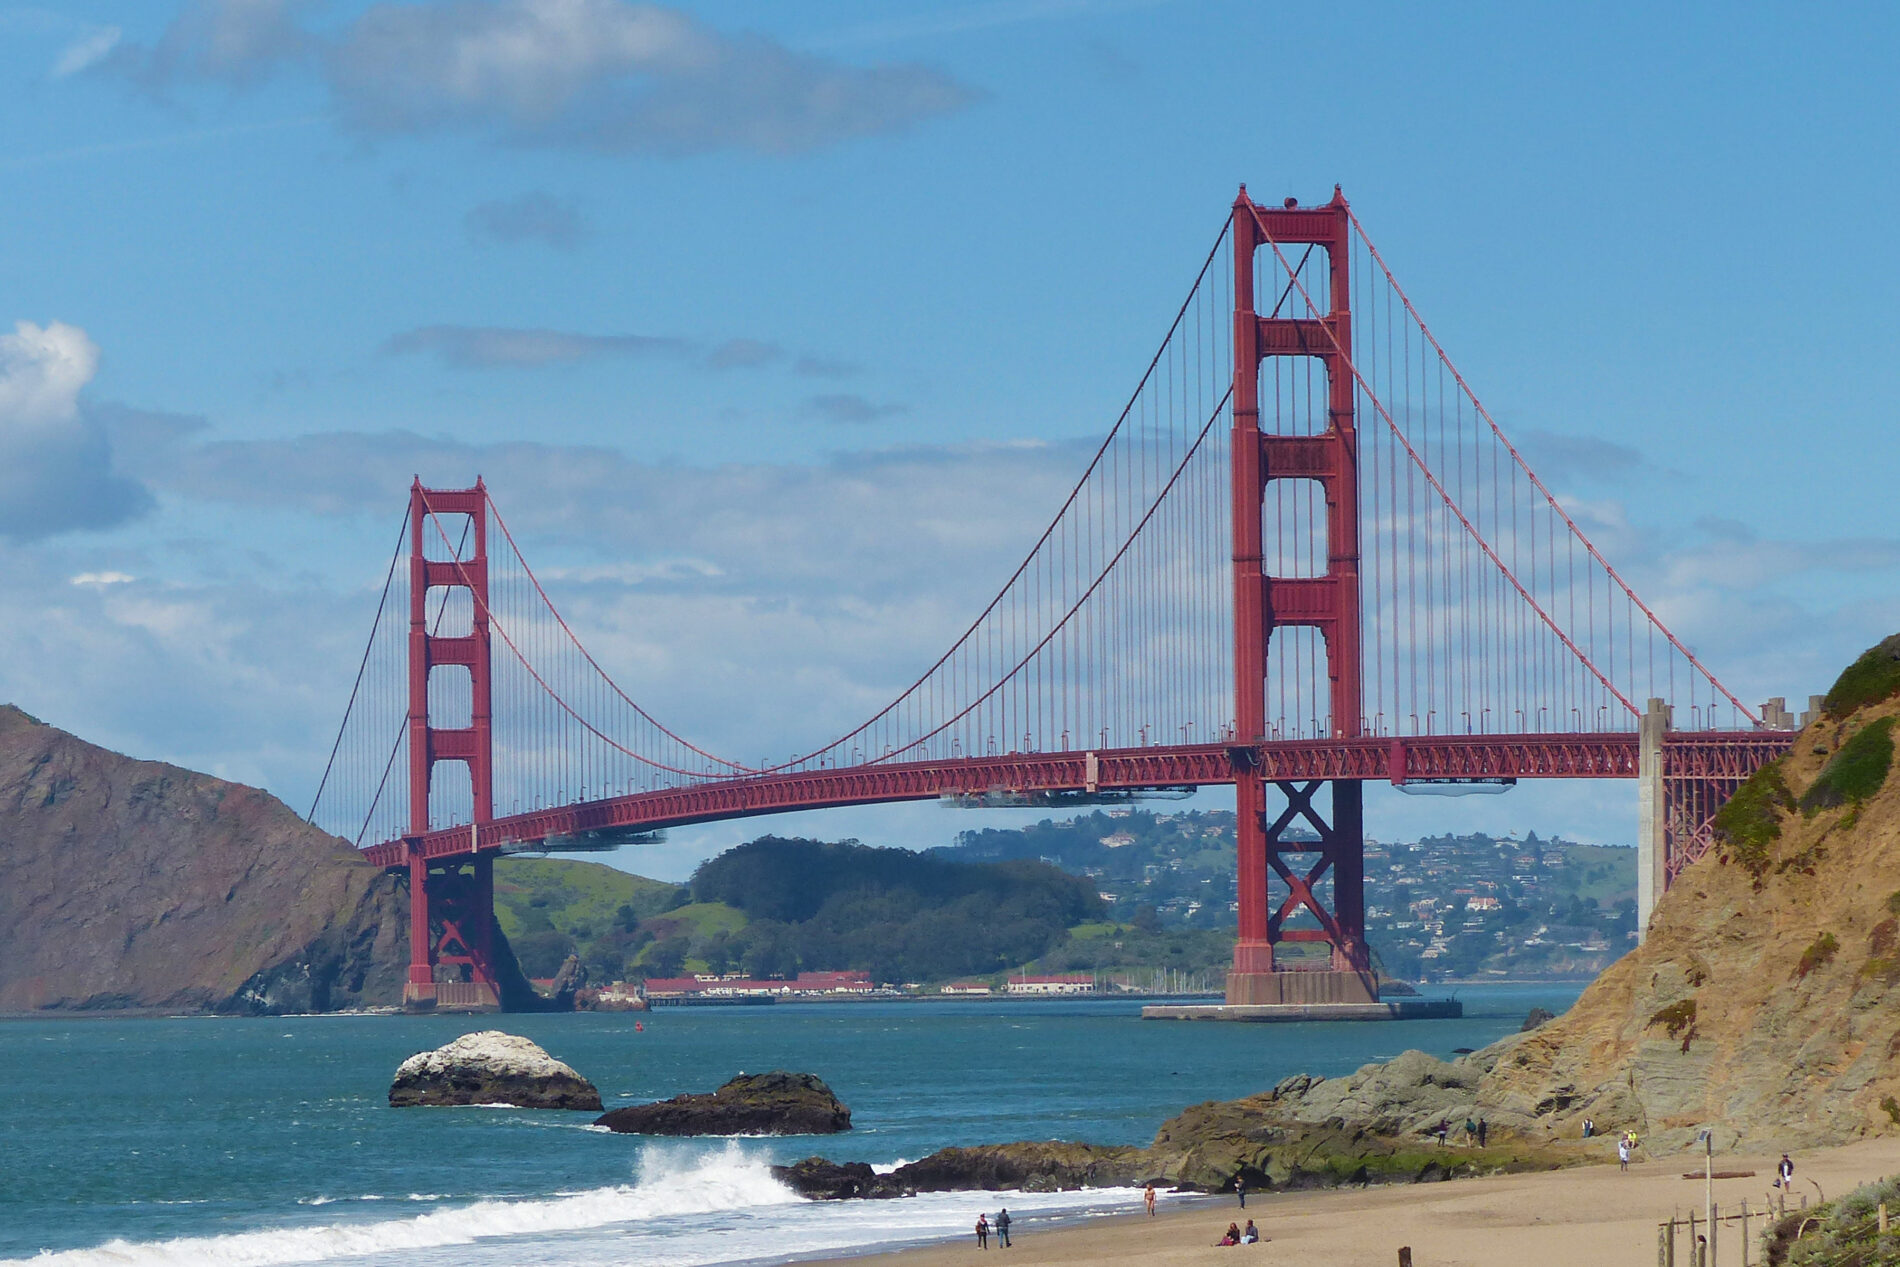 Baker Beach in San Francisco. It’s one of the best Golden Gate Bridge viewpoints.